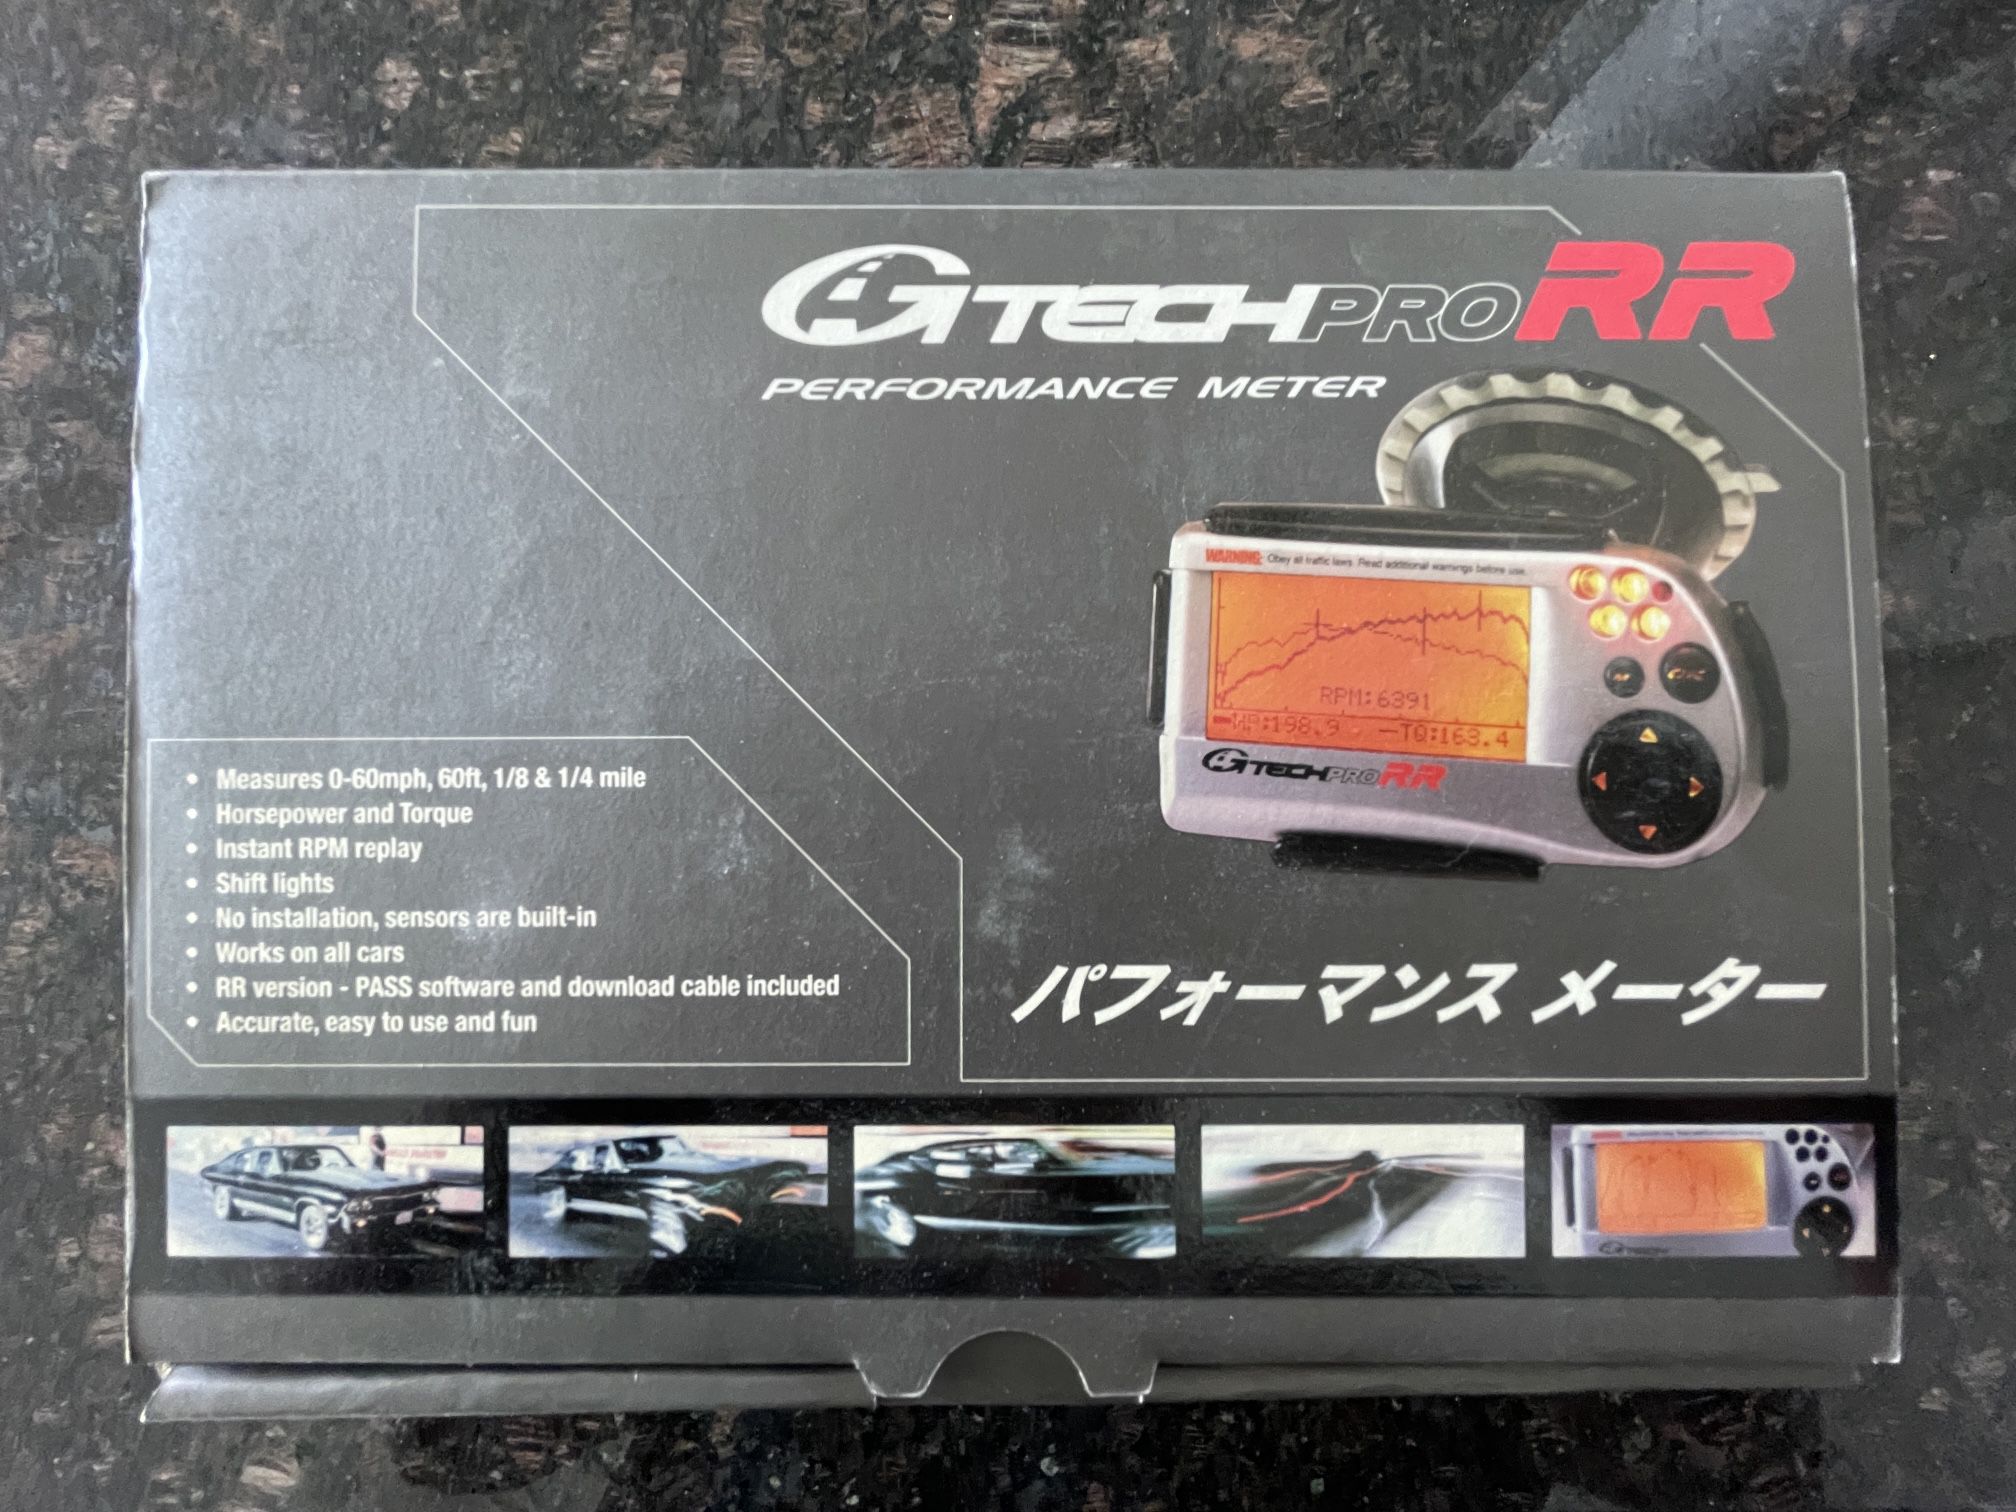 G-Tech Pro RR Performance Meter